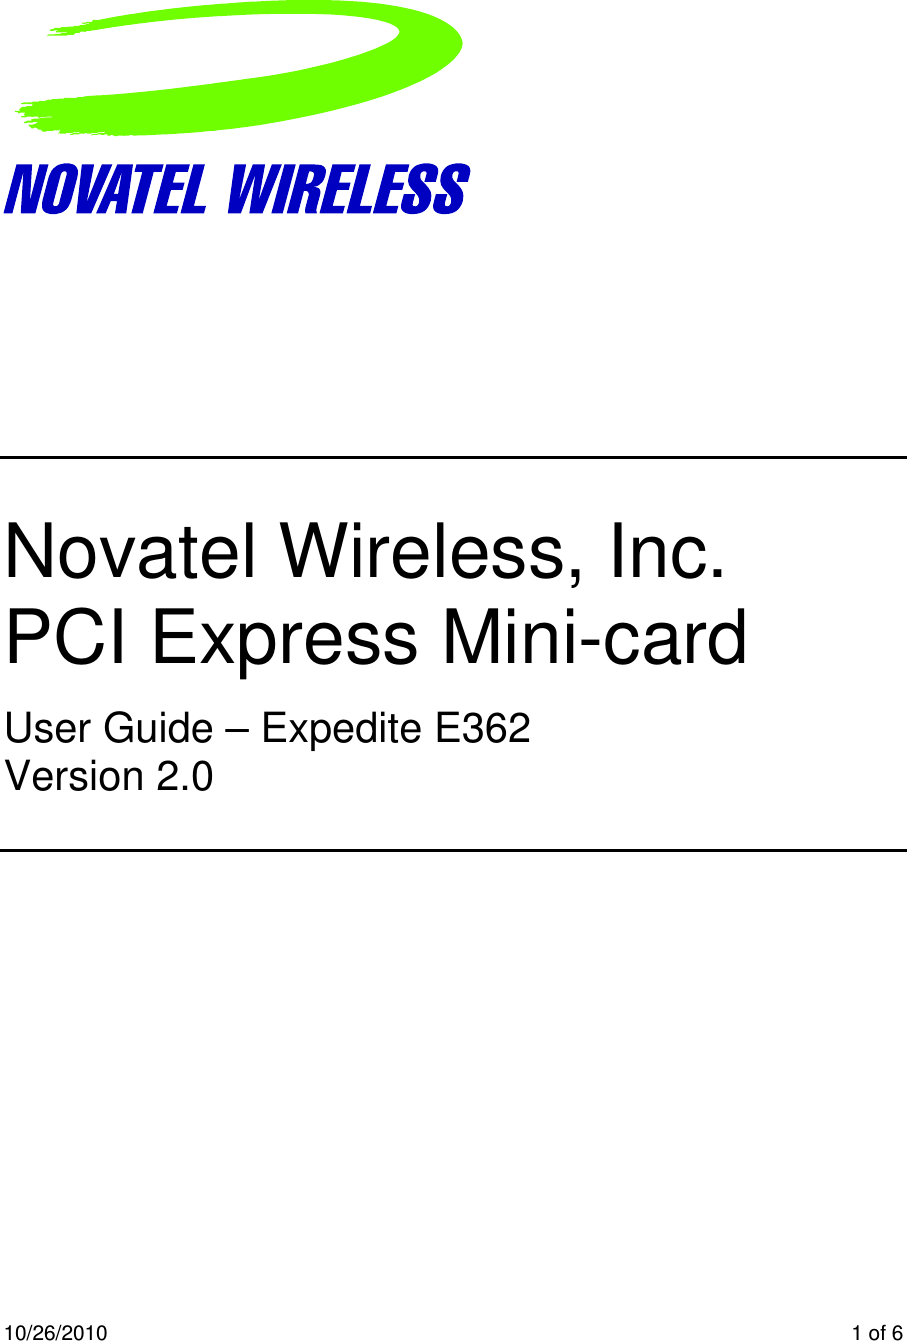 10/26/2010    1 of 6                 Novatel Wireless, Inc. PCI Express Mini-card  User Guide – Expedite E362 Version 2.0     